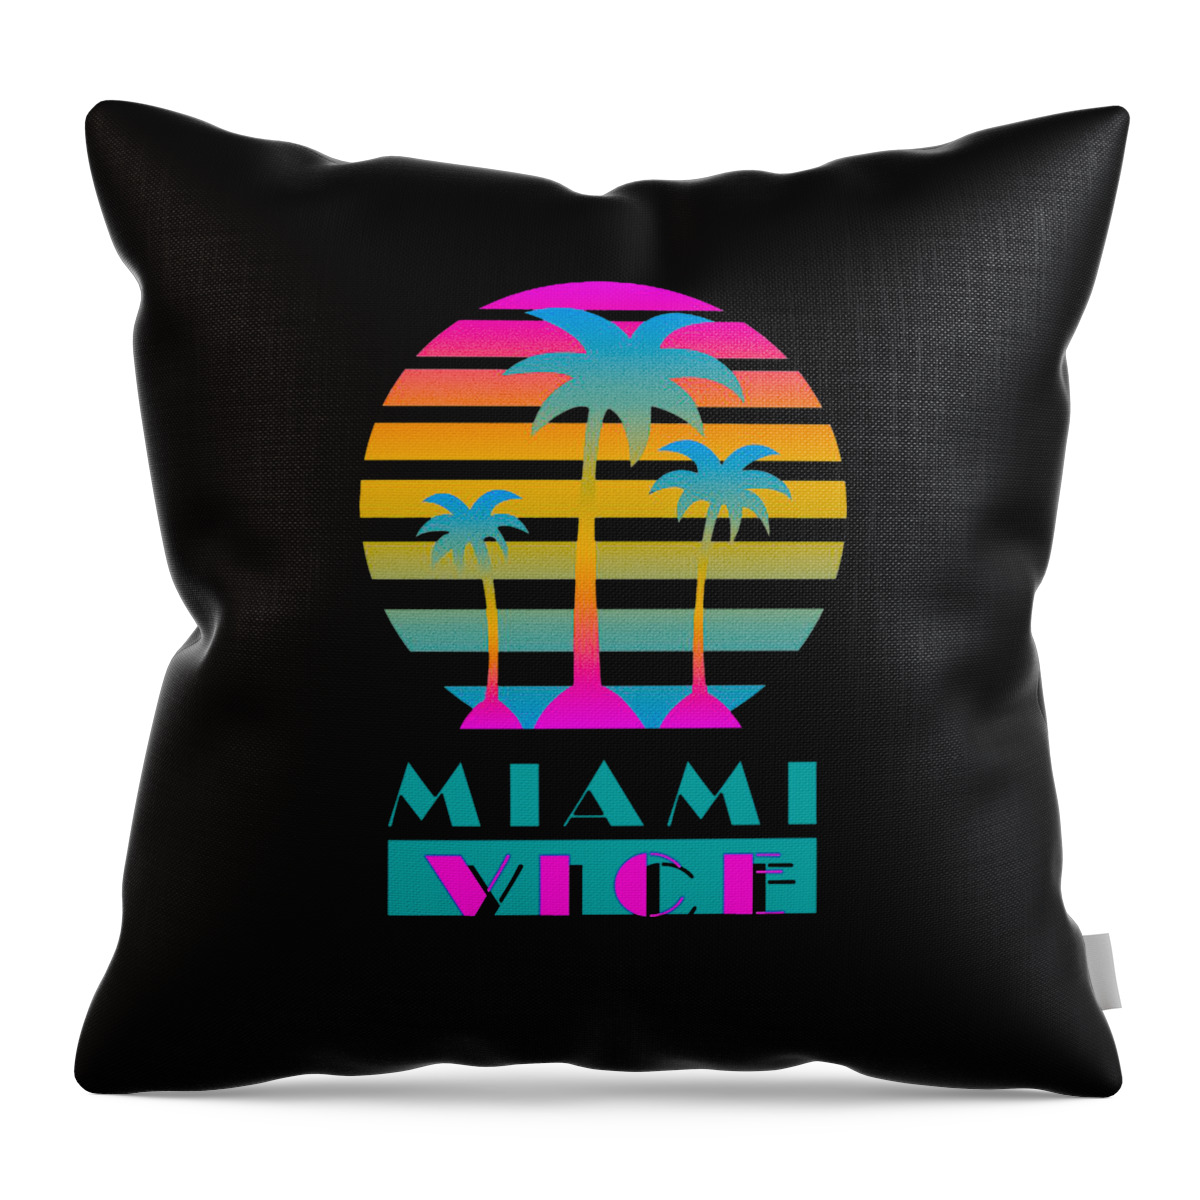 Miami Vice Throw Pillow featuring the digital art Miami Vice by Bilskirobert